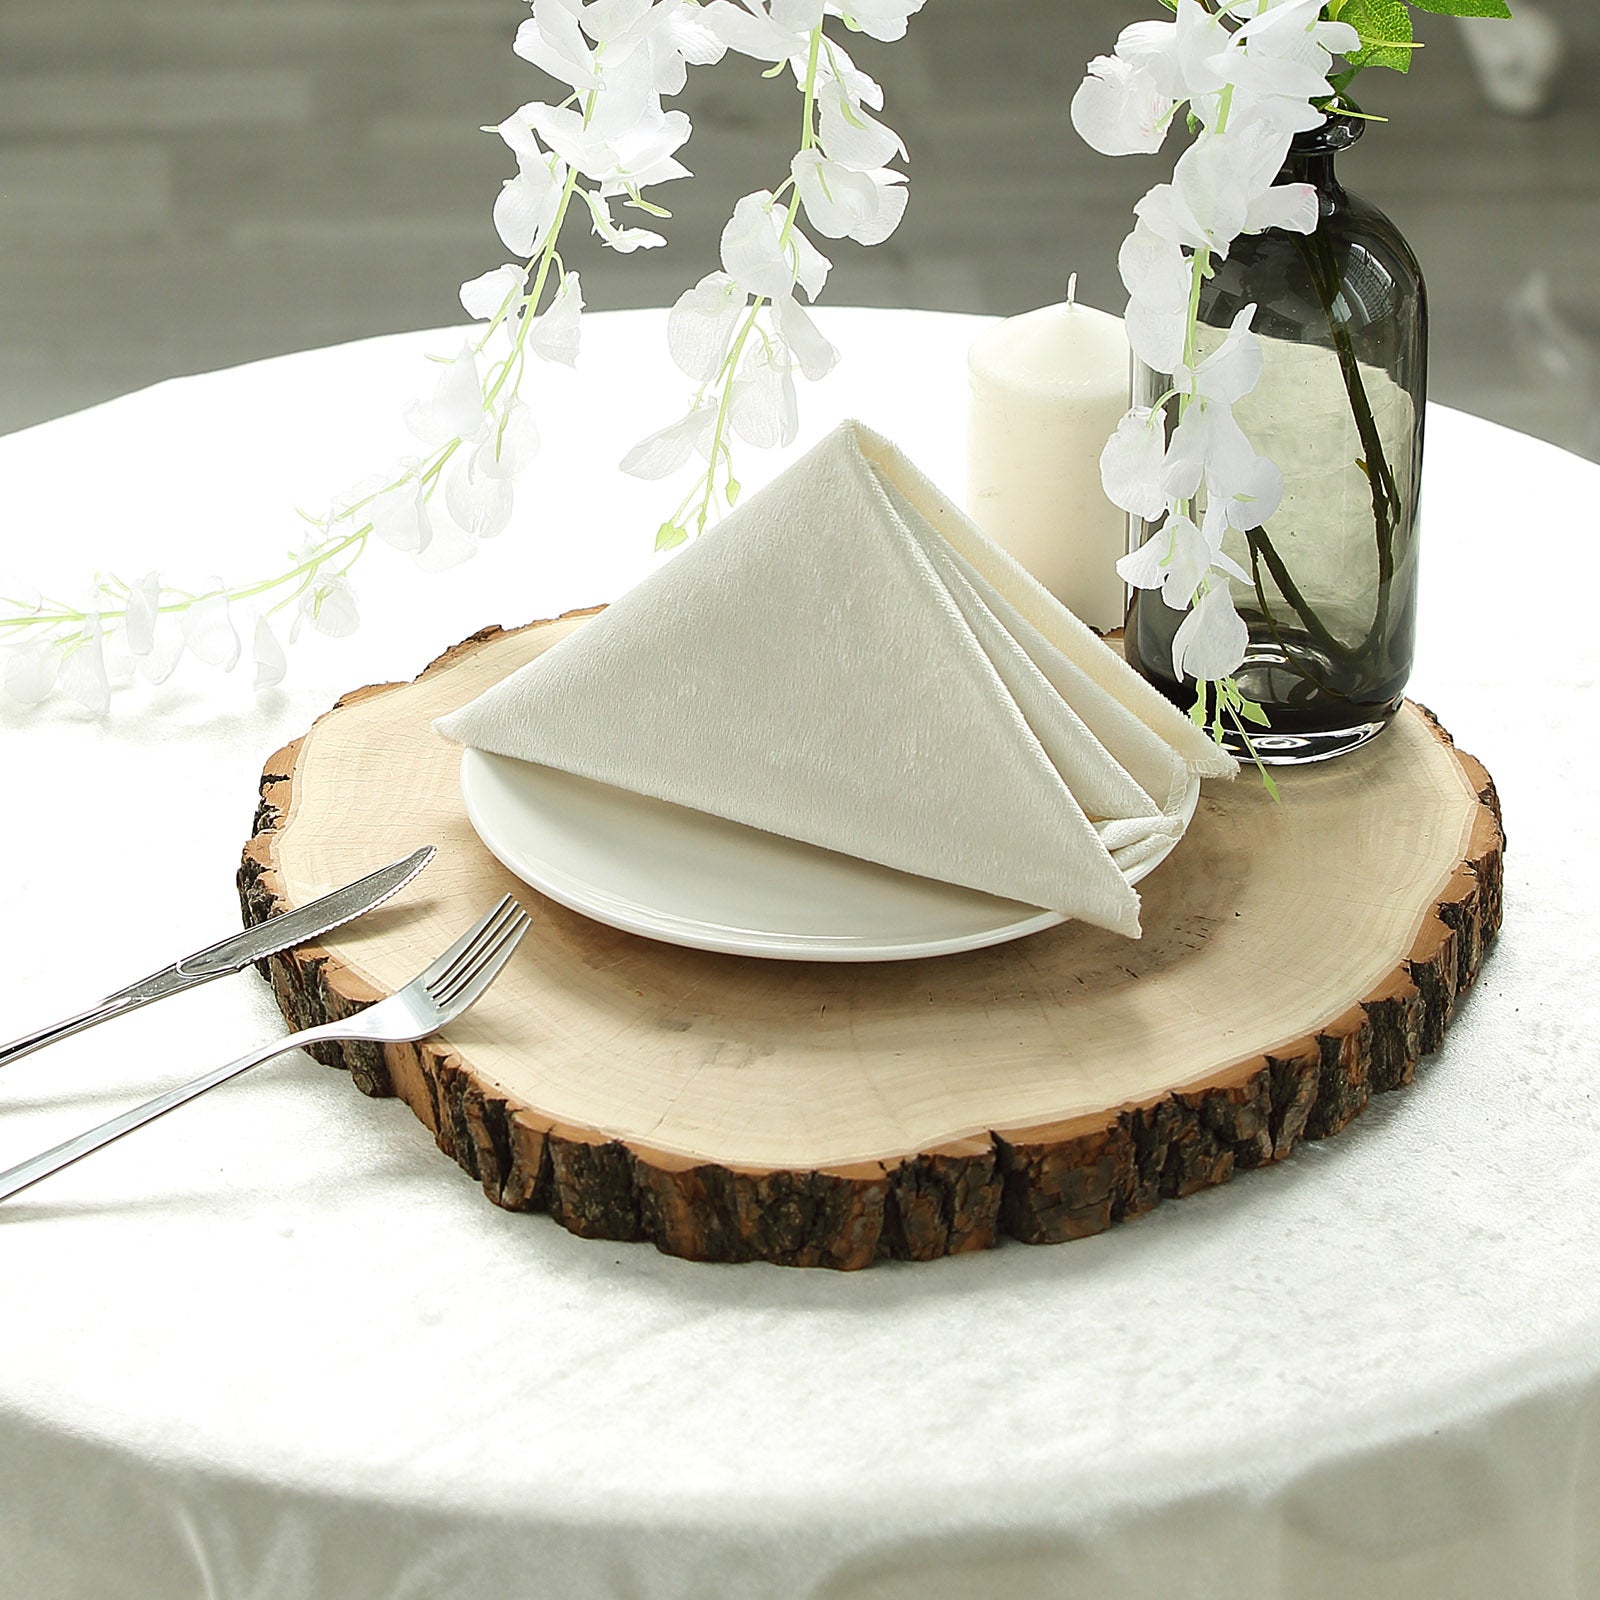 Rustic Wedding Centerpiece - Round Tree Bark Slice Natural Wood